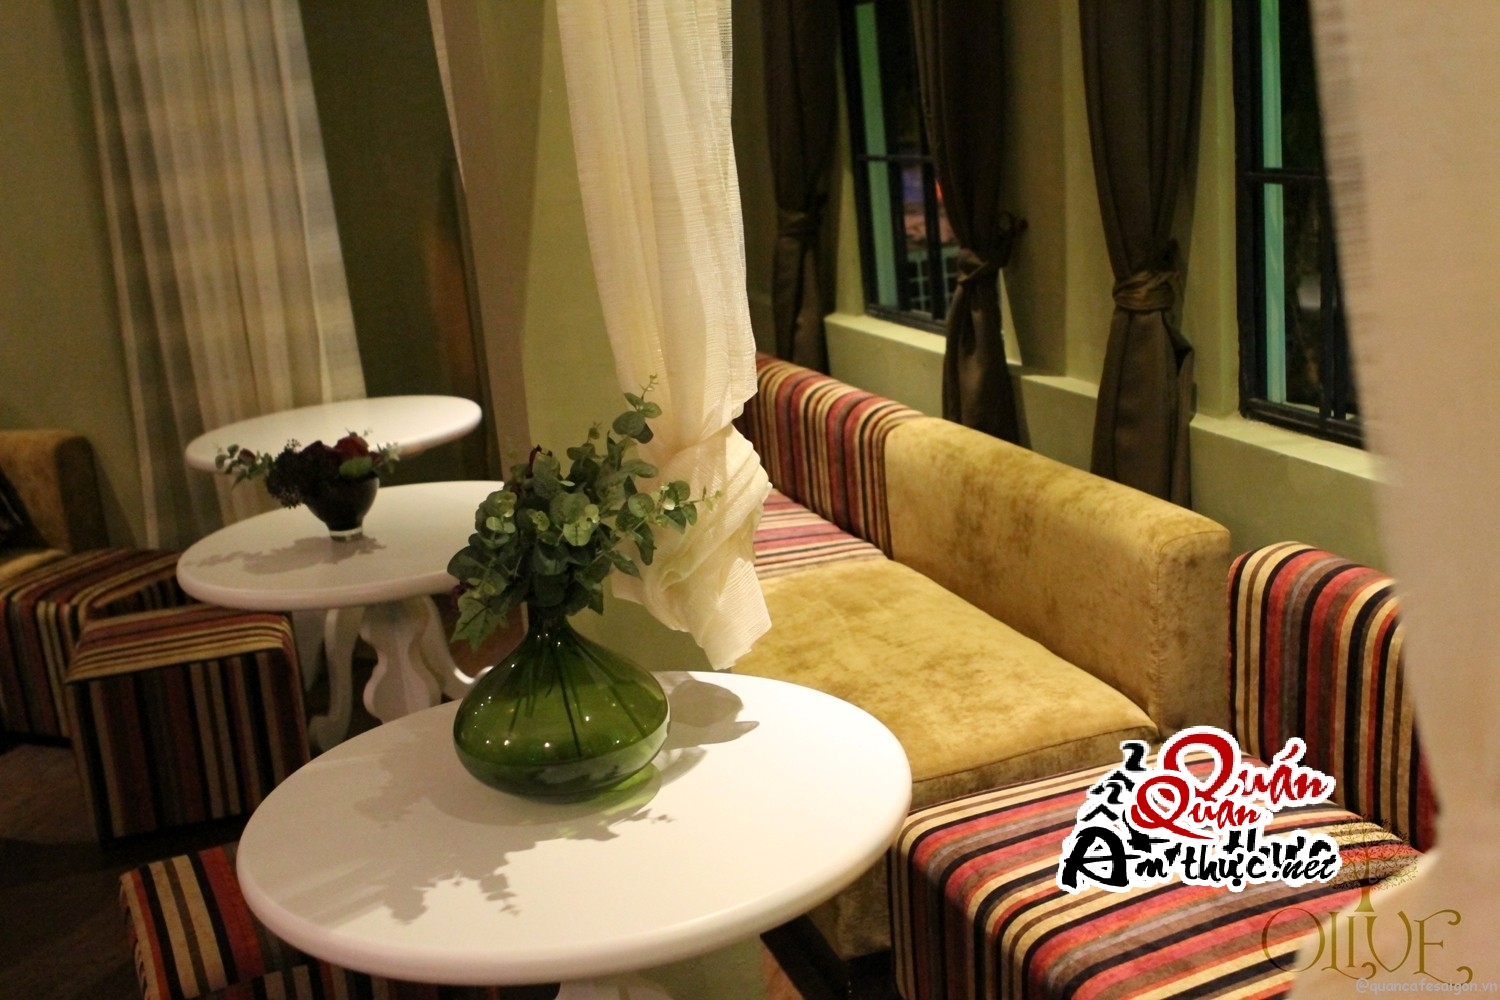 cua-truoc-cafe-olive1 Olive Cafe Lounge - Sang trọng, lịch sự và thu hút